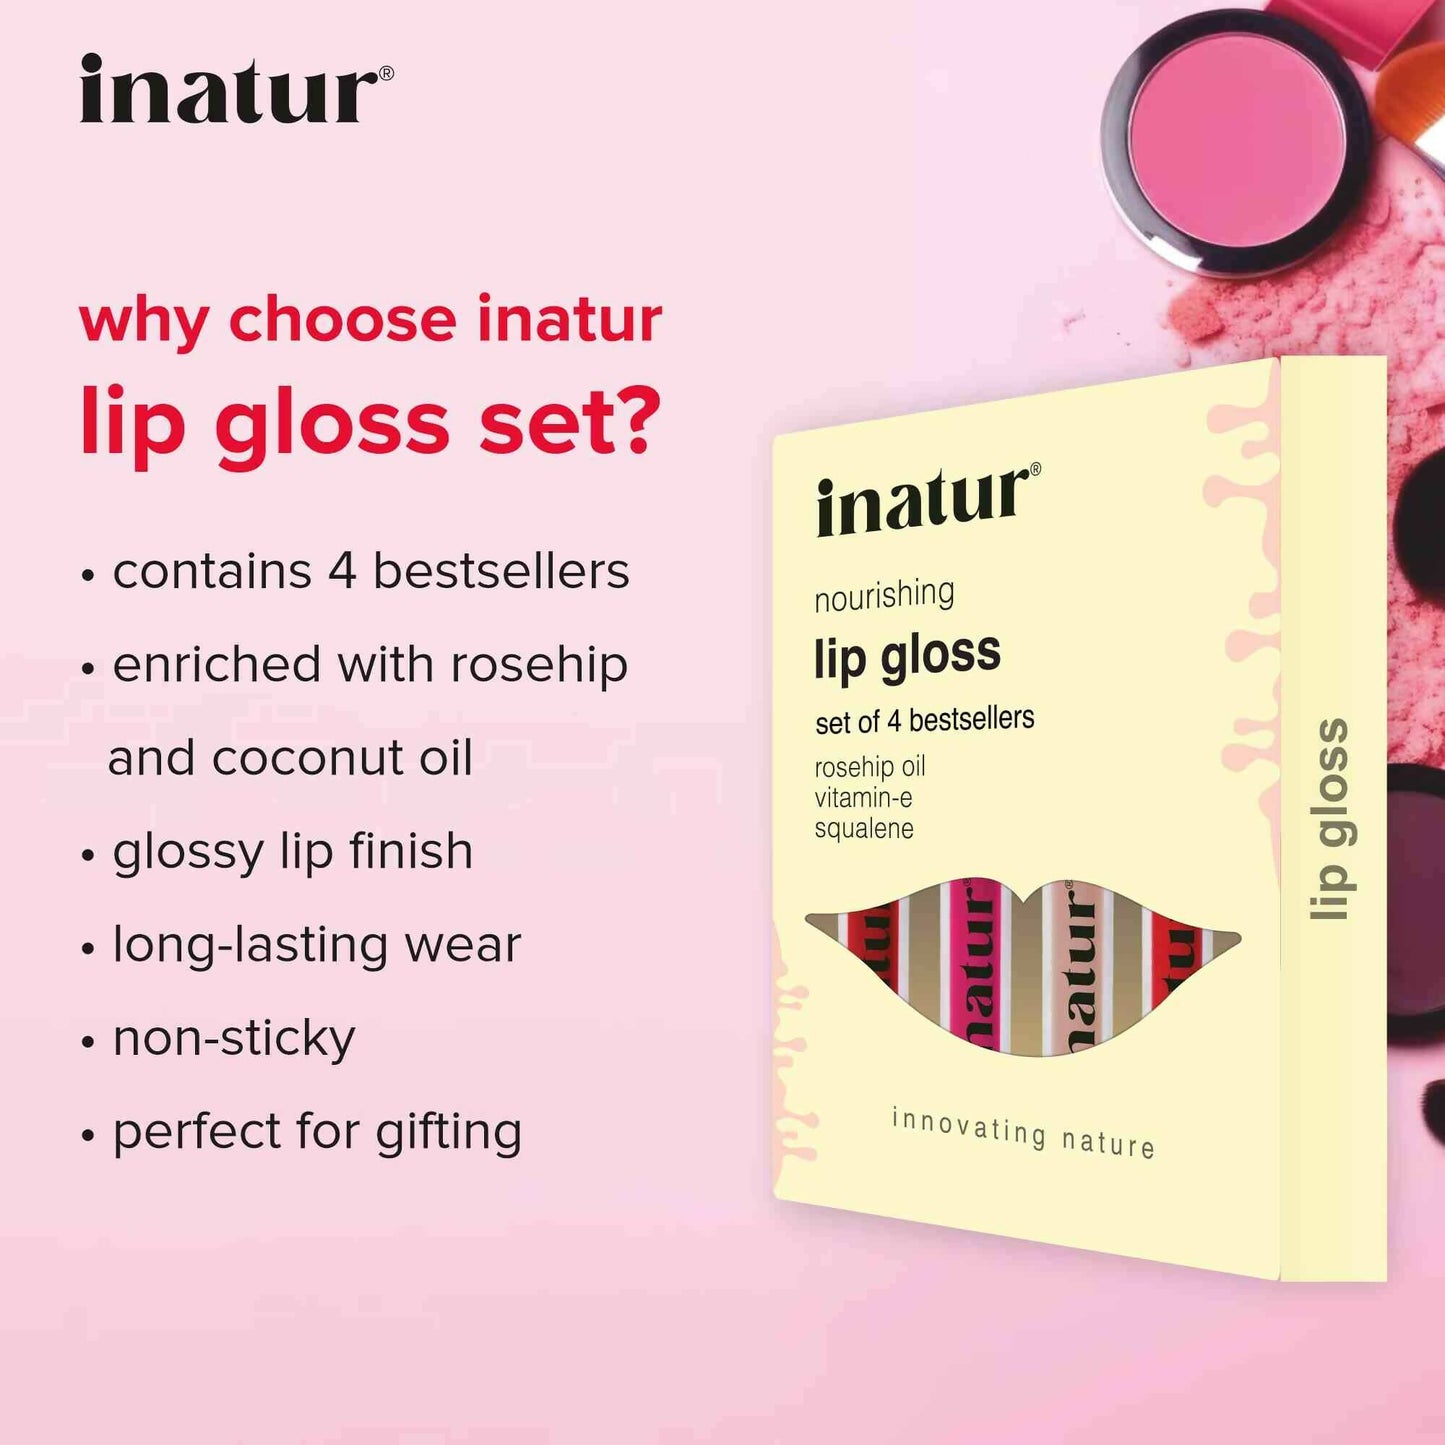 Inatur Lip Gloss Gift Box